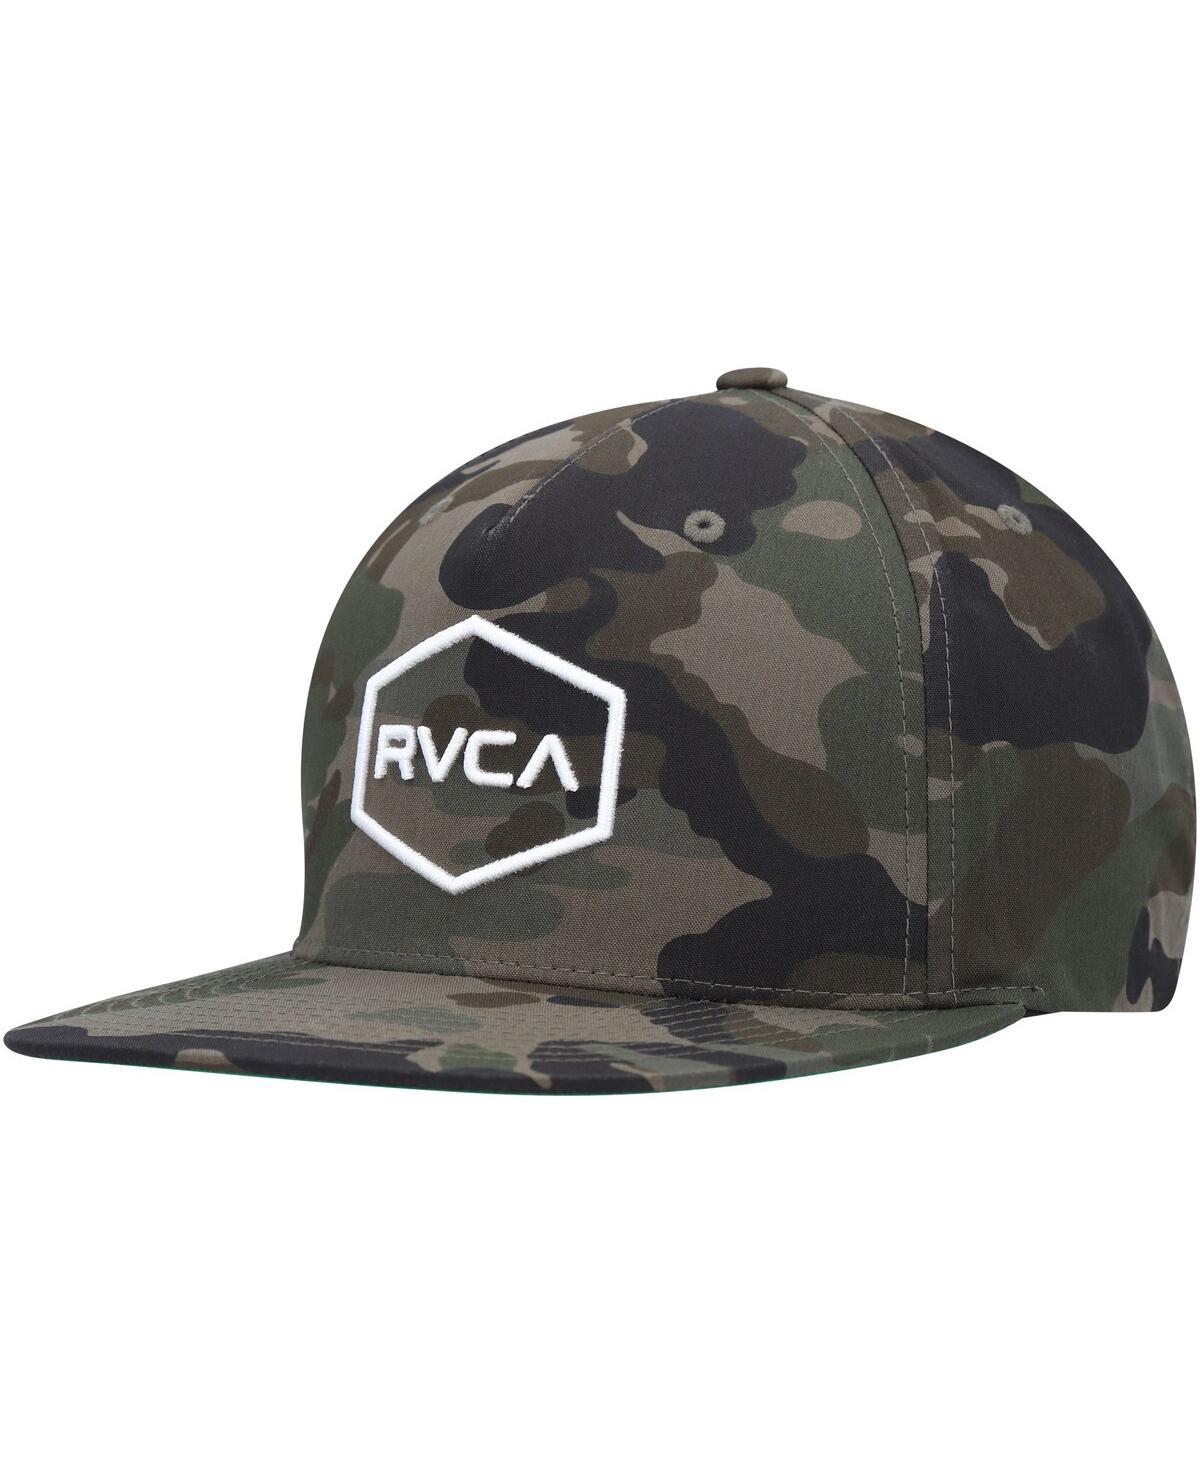 Men's Rvca Camo Commonwealth Adjustable Snapback Hat - Camo